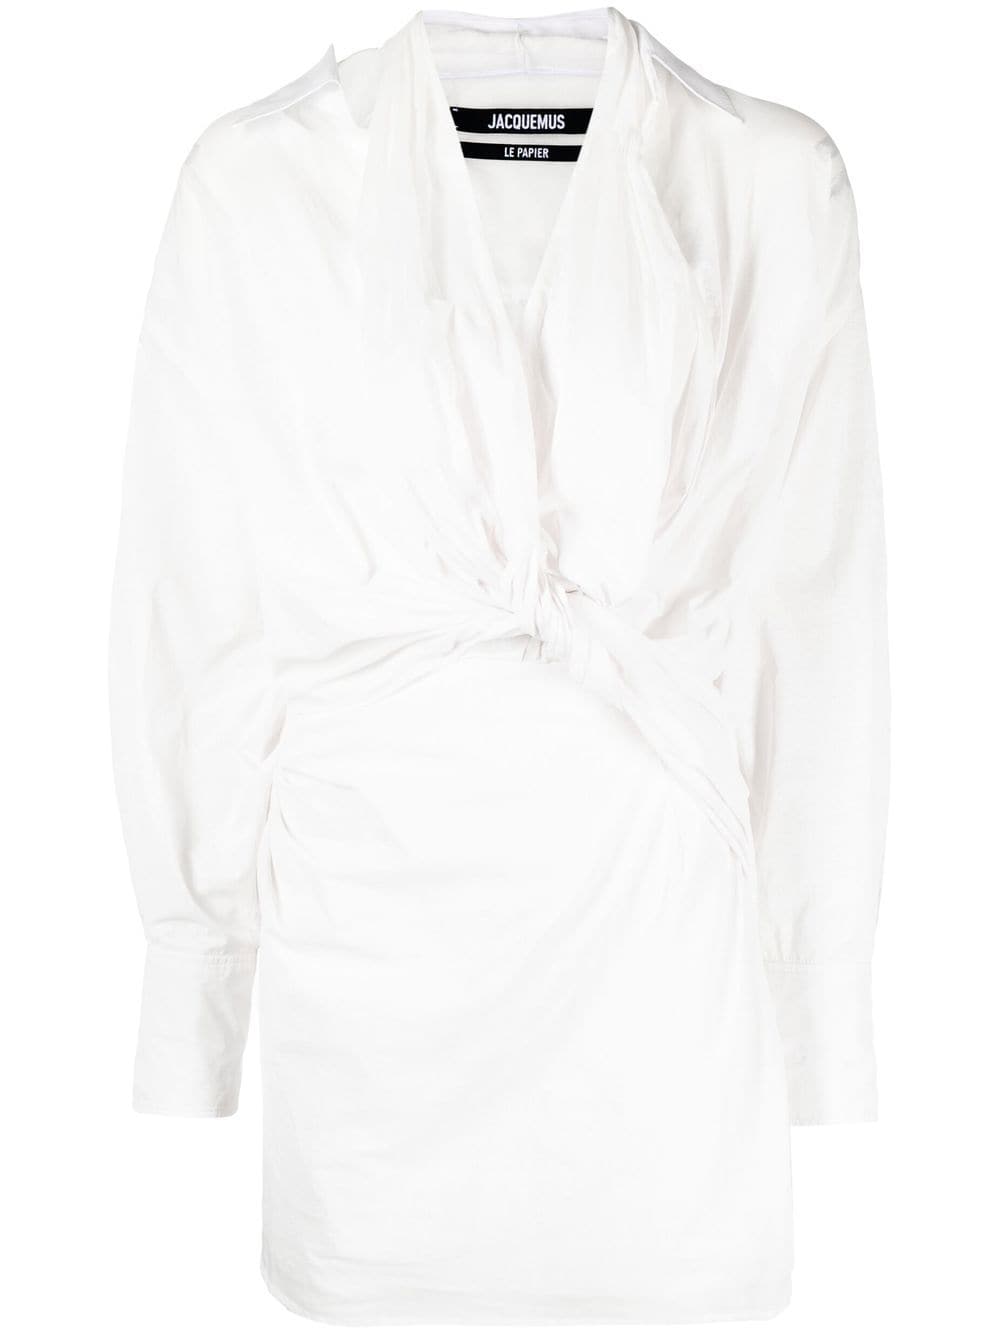 Jacquemus knot-detail shirt dress - White